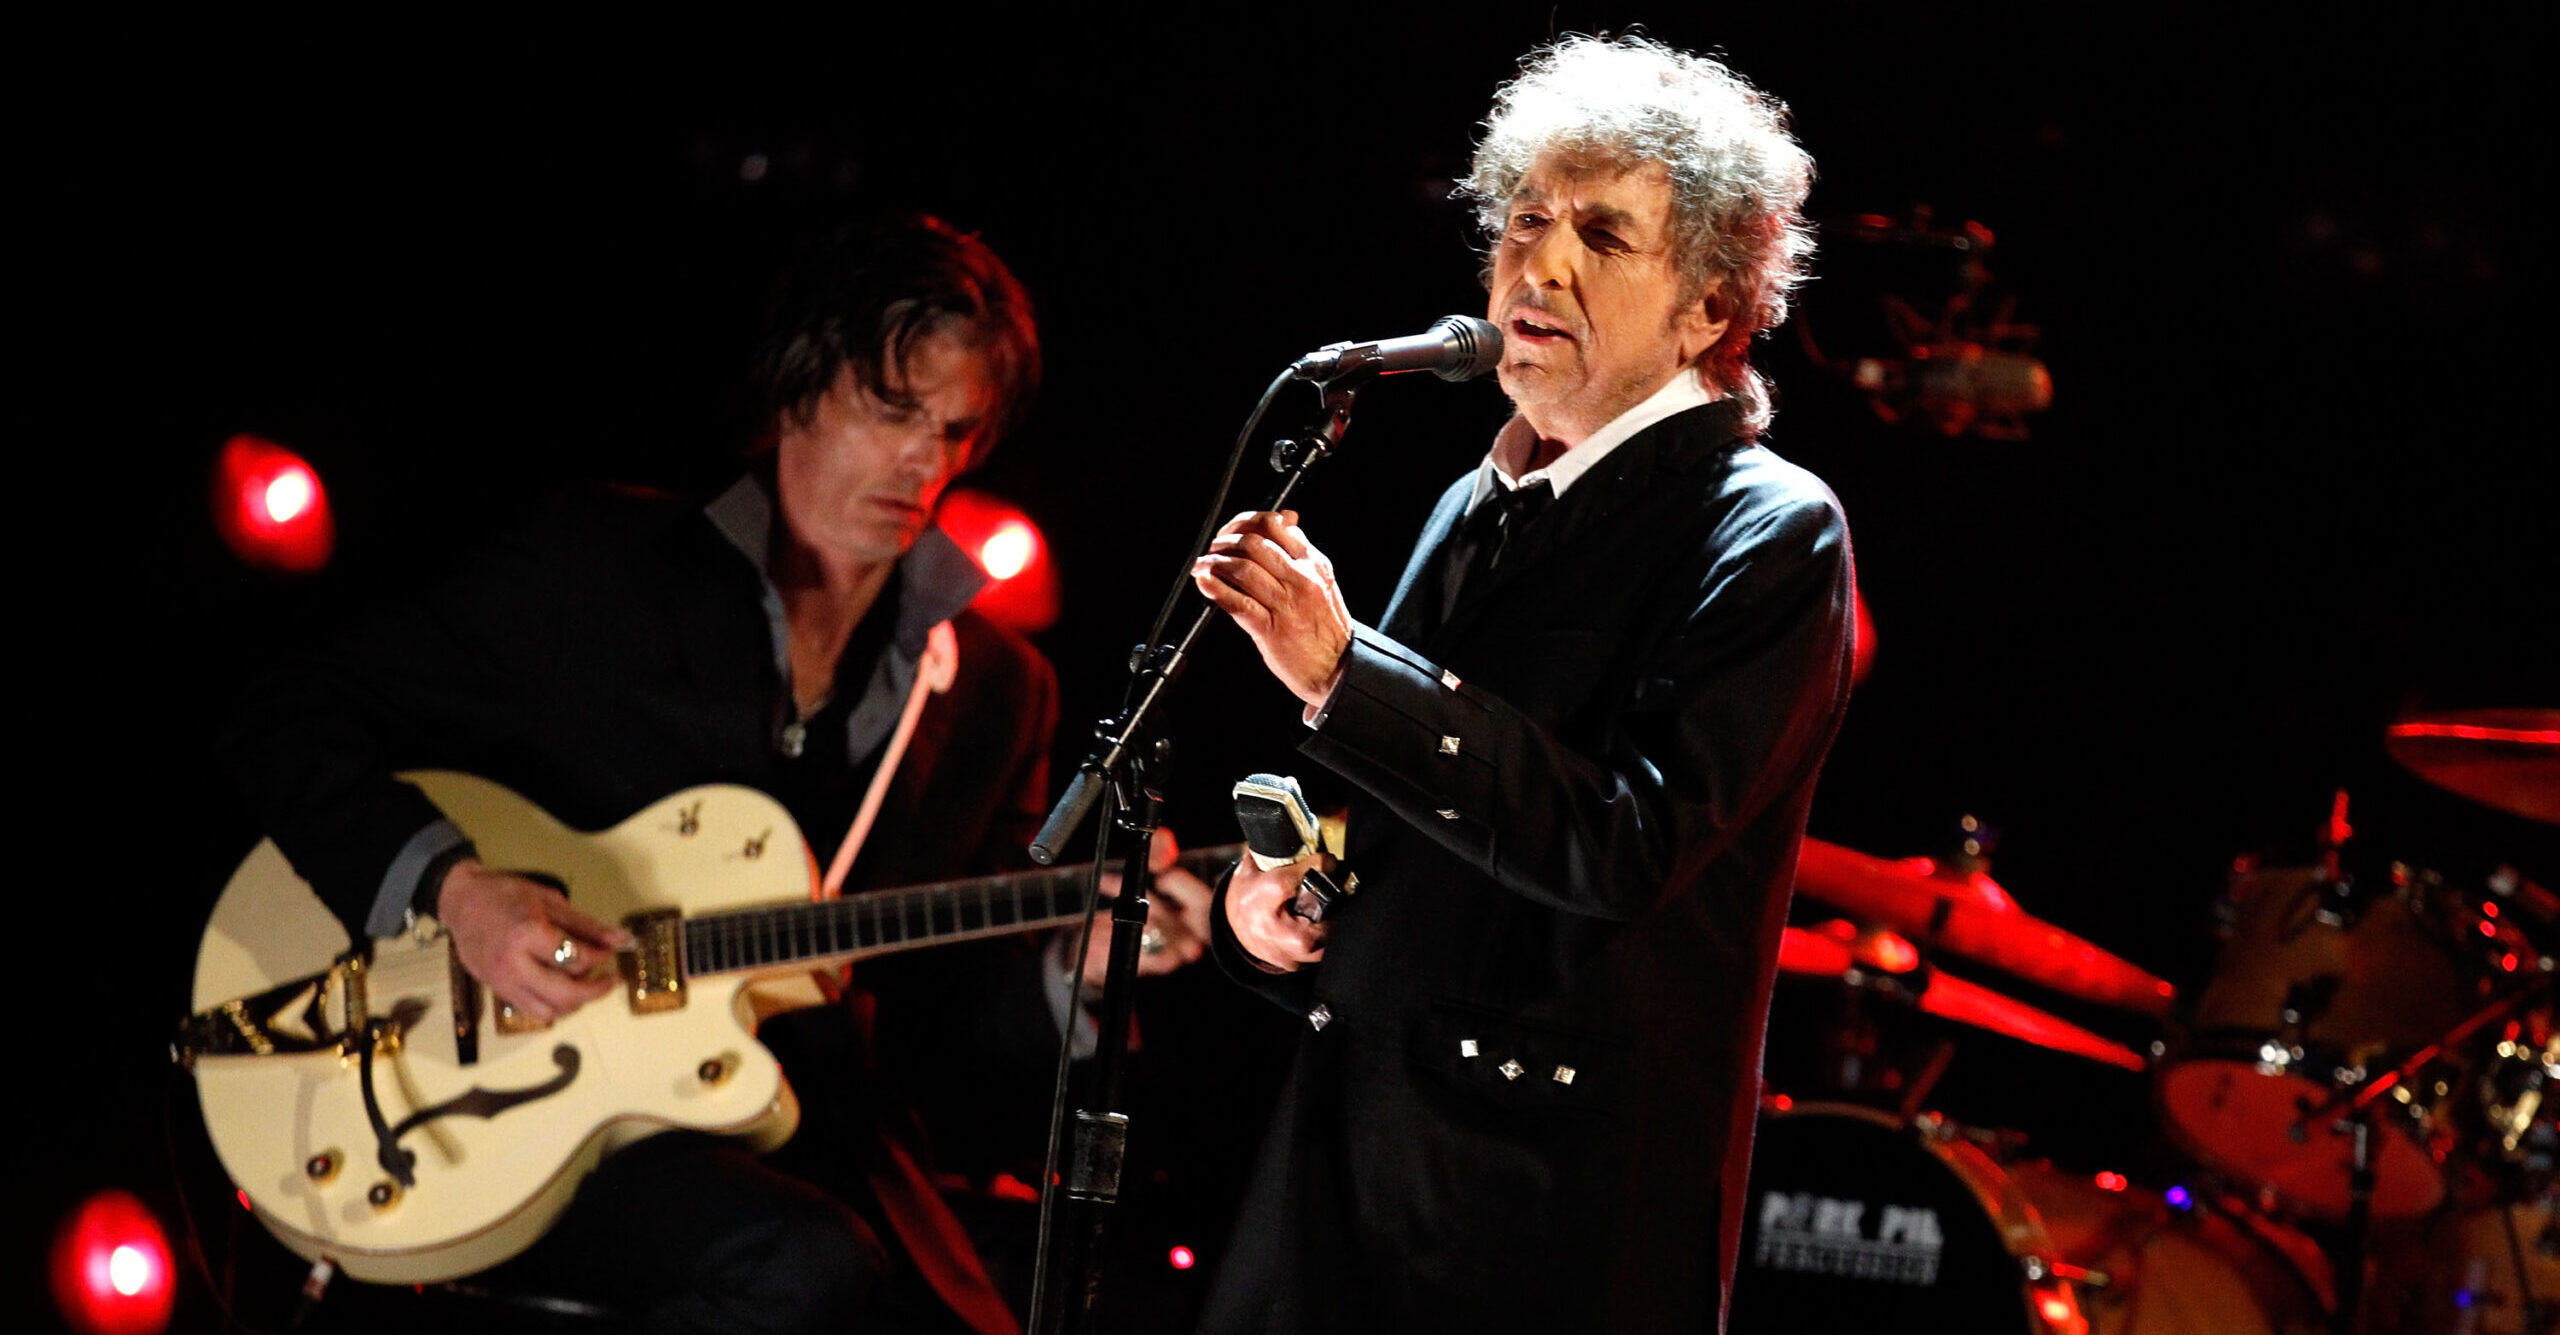 Jokerman: Bob Dylan Beyond Eighty